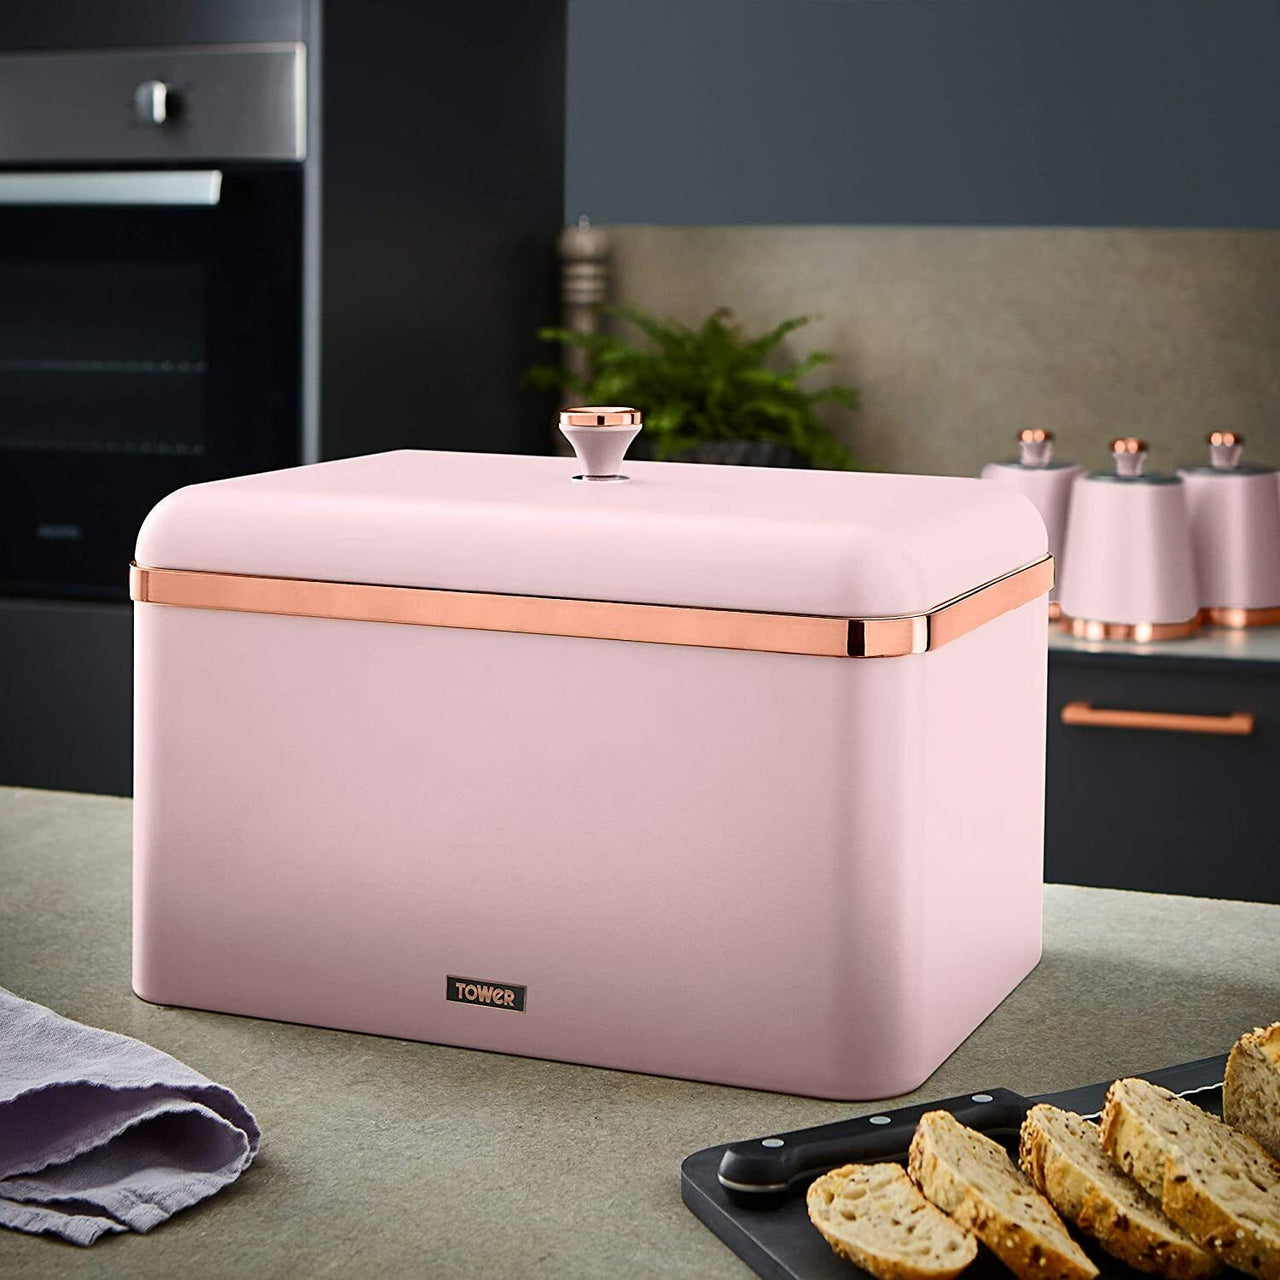 Tower Cavaletto Bread Bin, Mug Tree, Towel Pole Kitchen Set Pink & Rose Gold